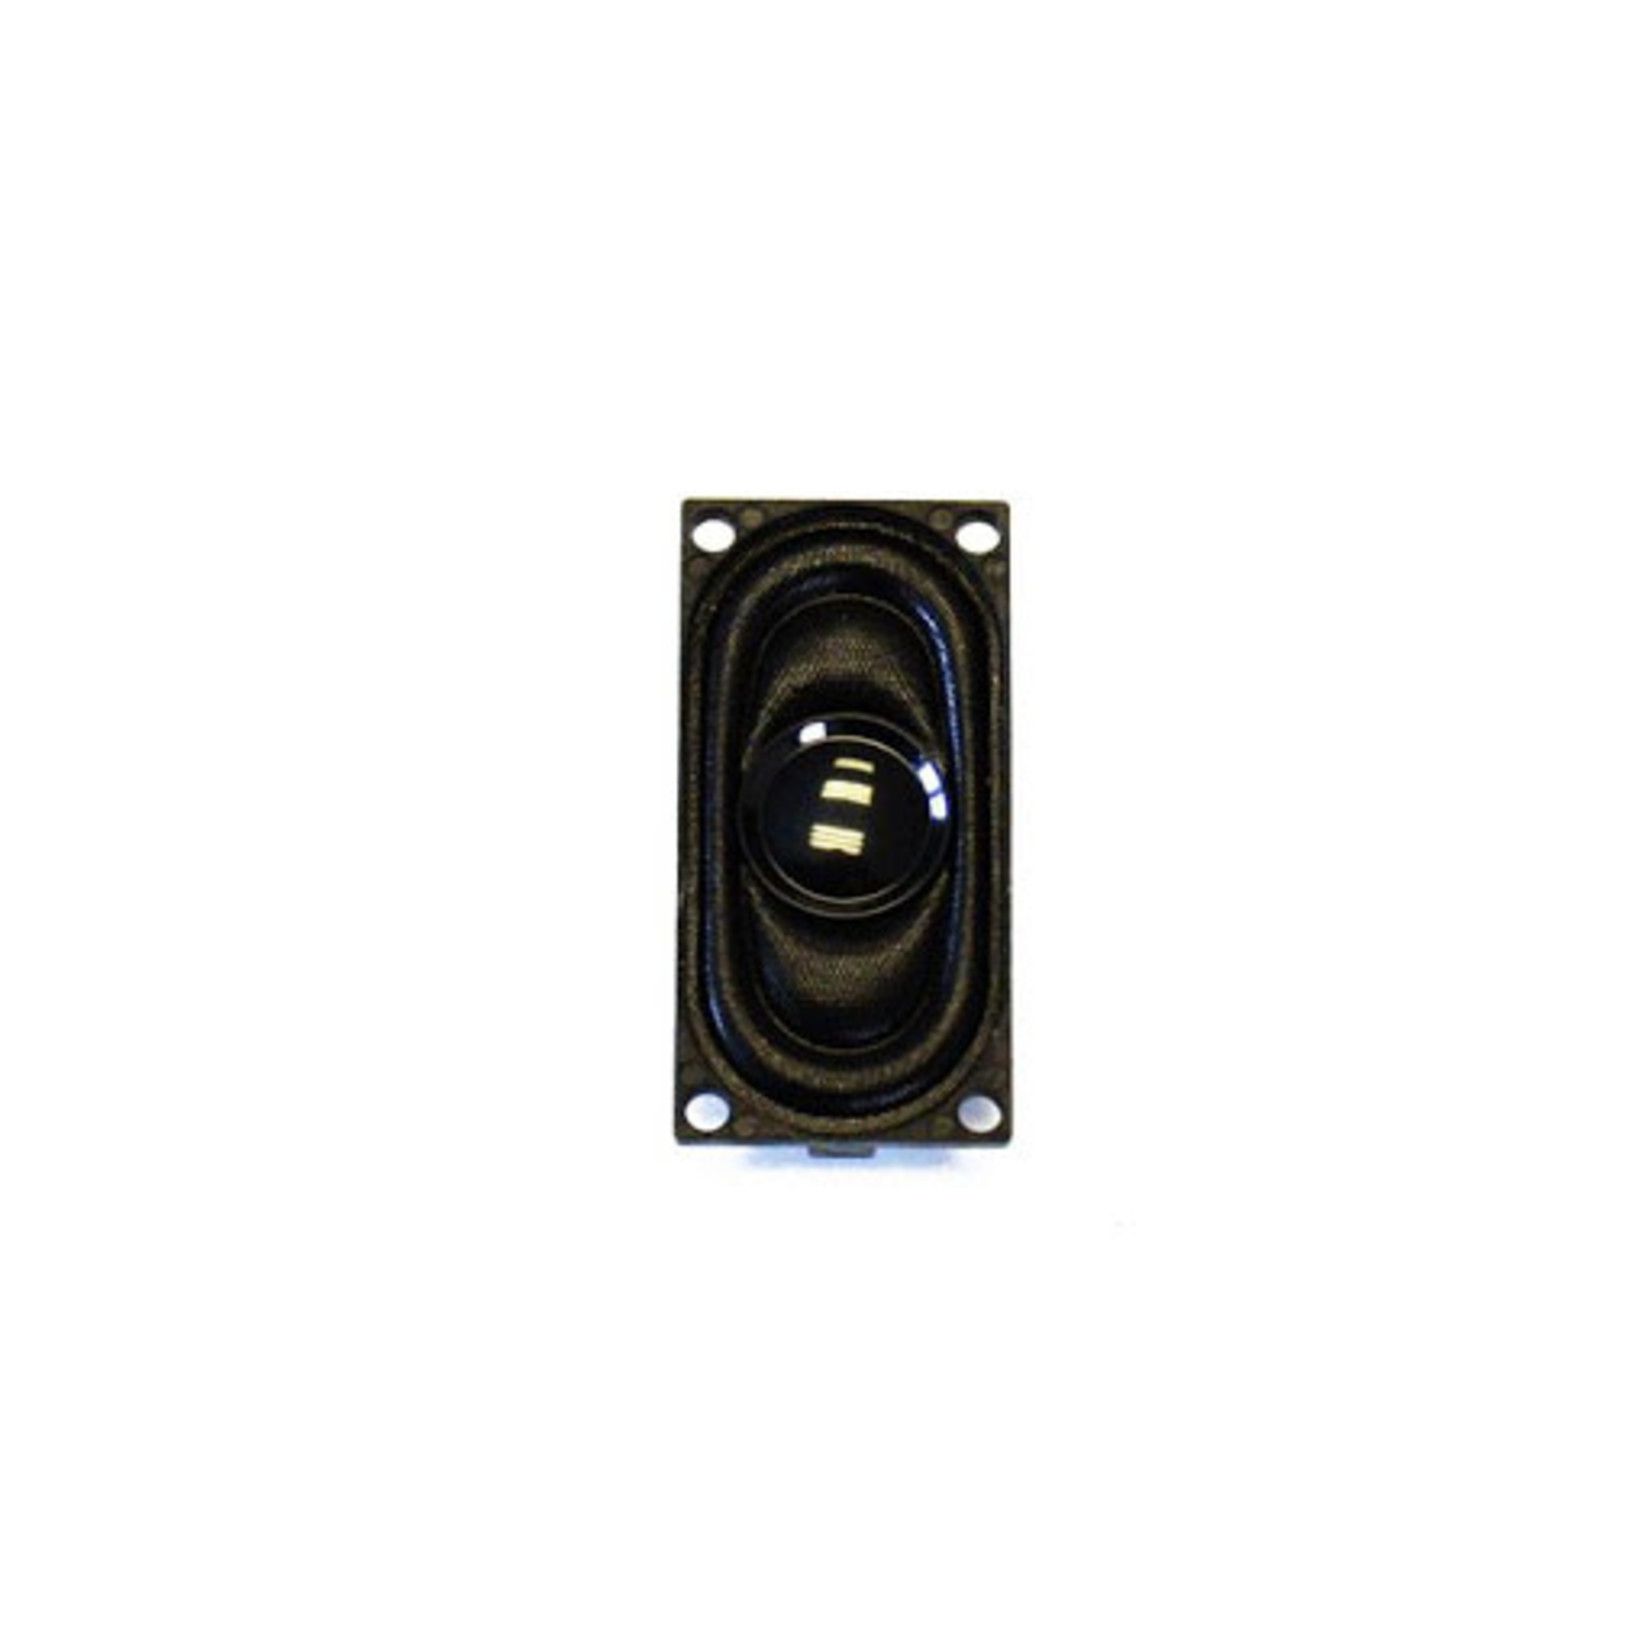 Soundtraxx Oval Speaker 40 x 20mm